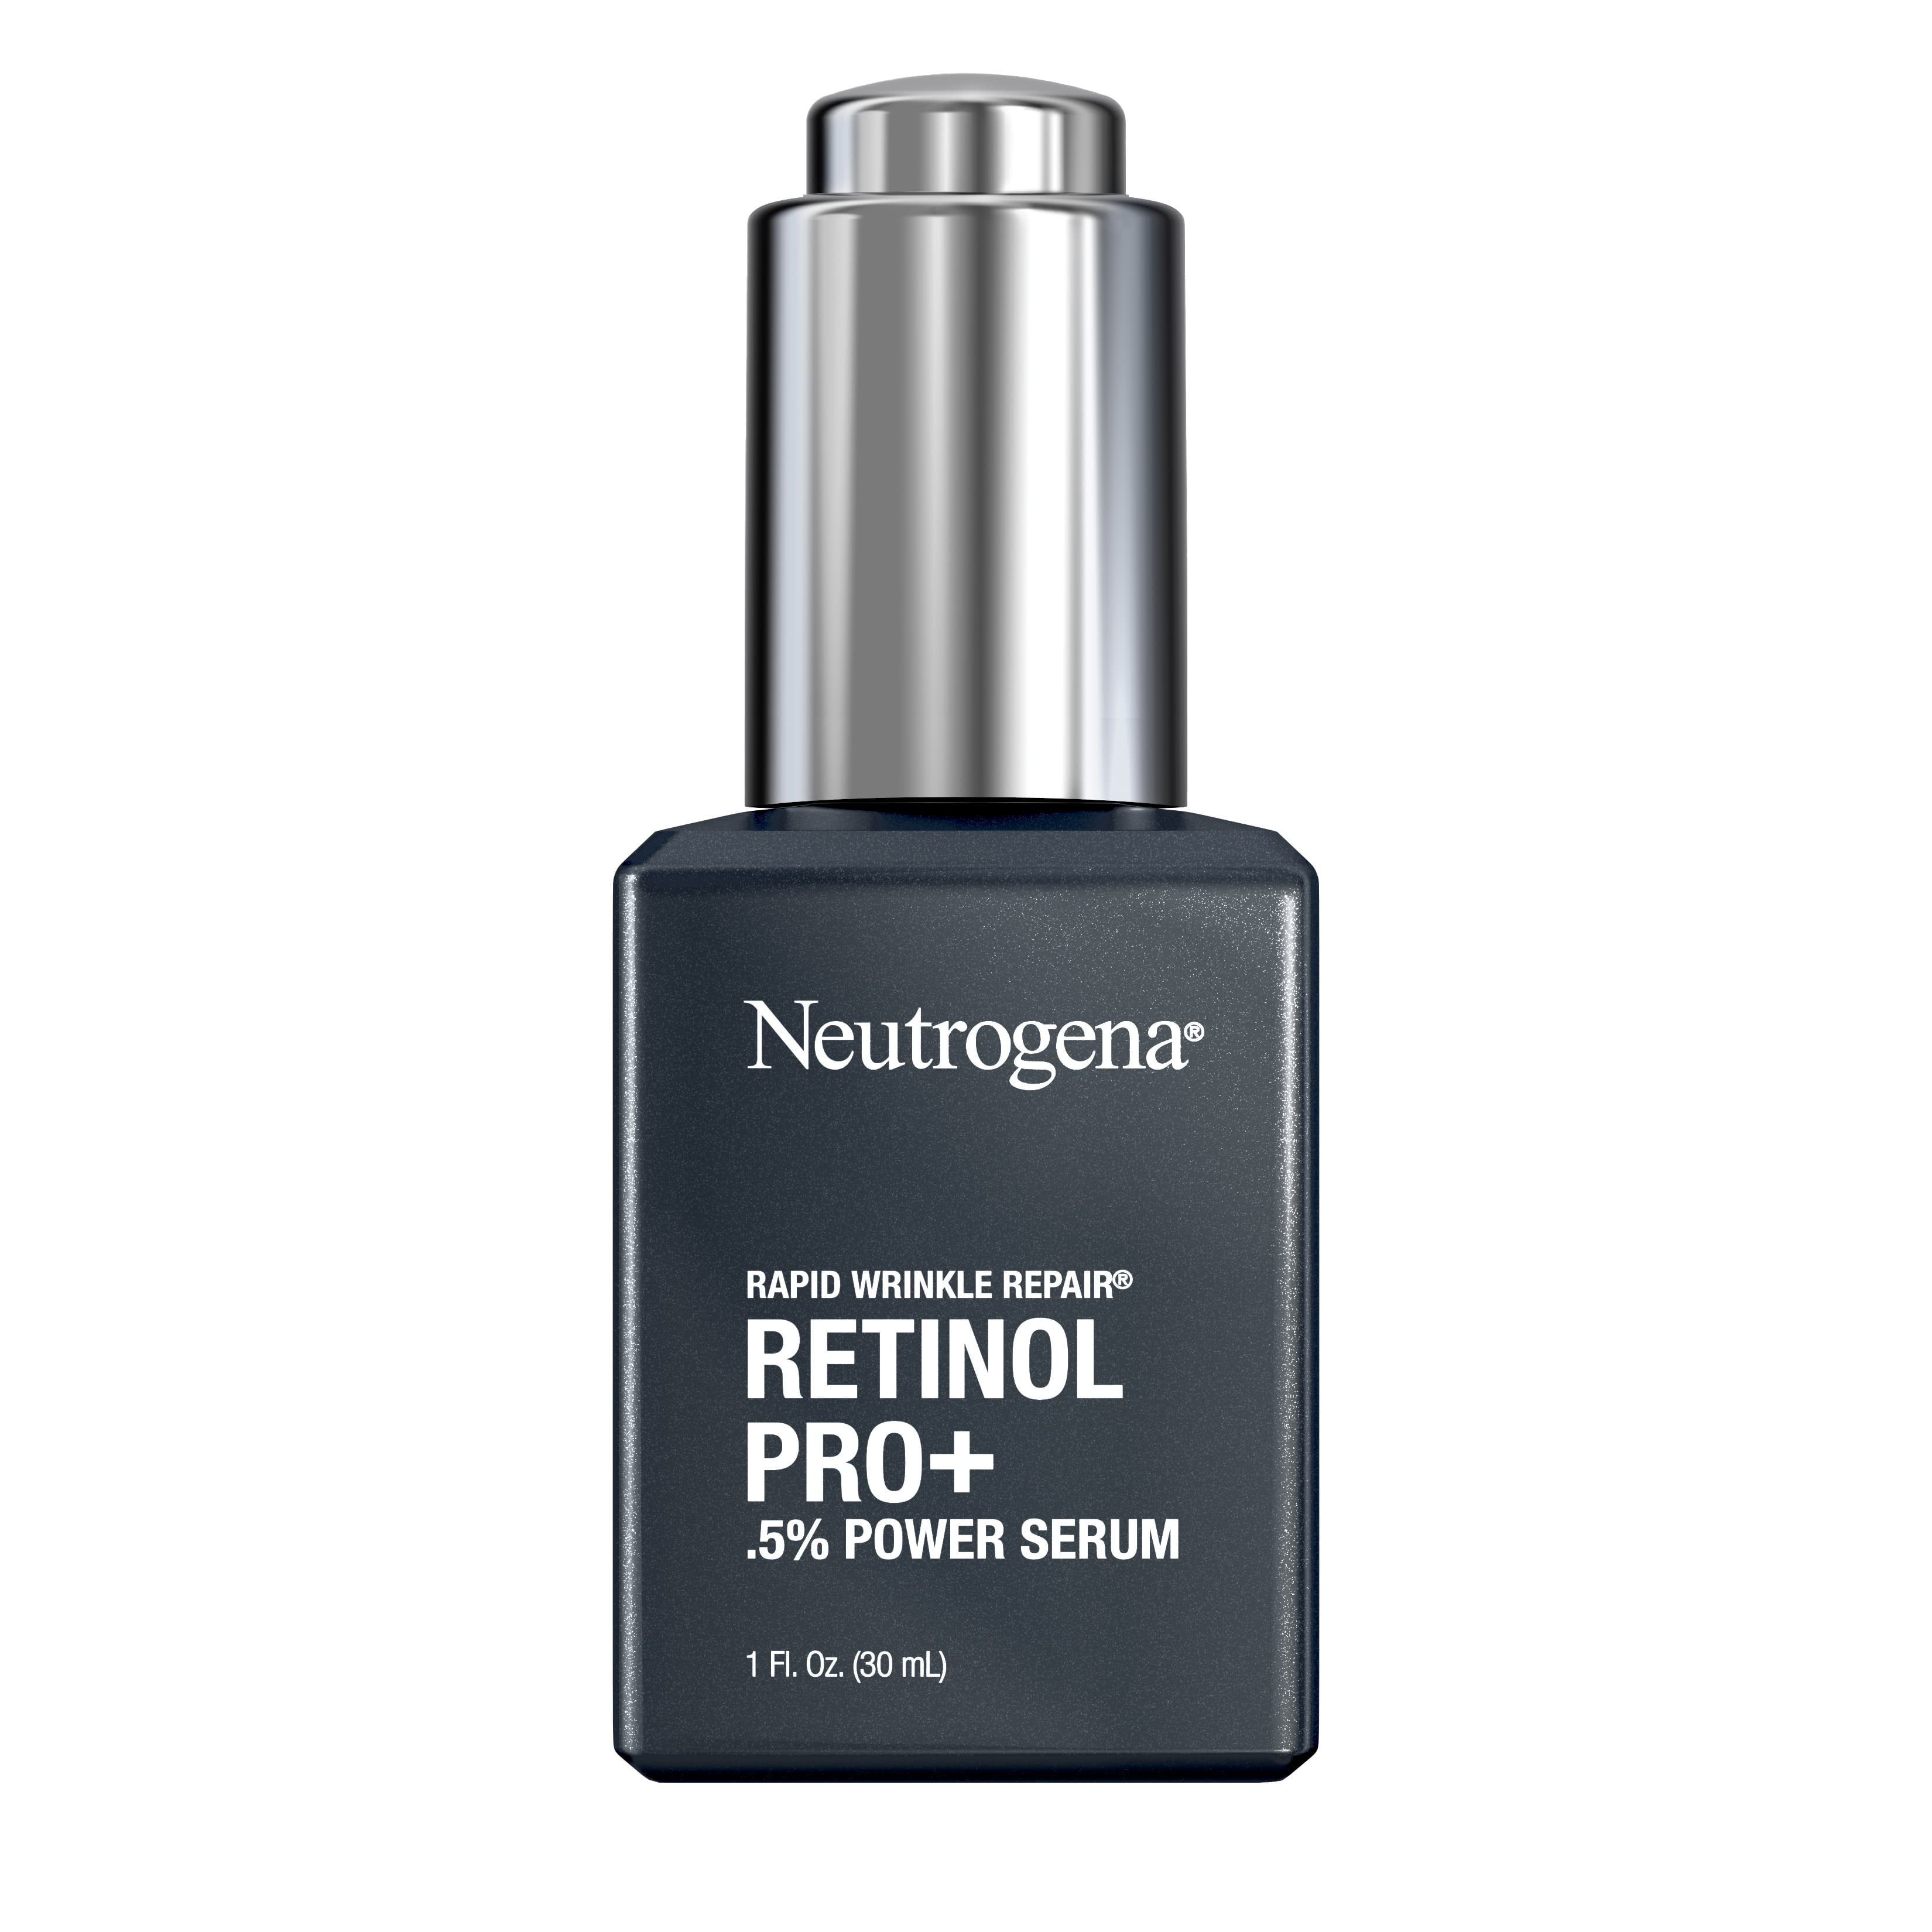 Neutrogena Rapid Wrinkle Repair Retinol Pro+.5% Power Serum, 1 fl. oz